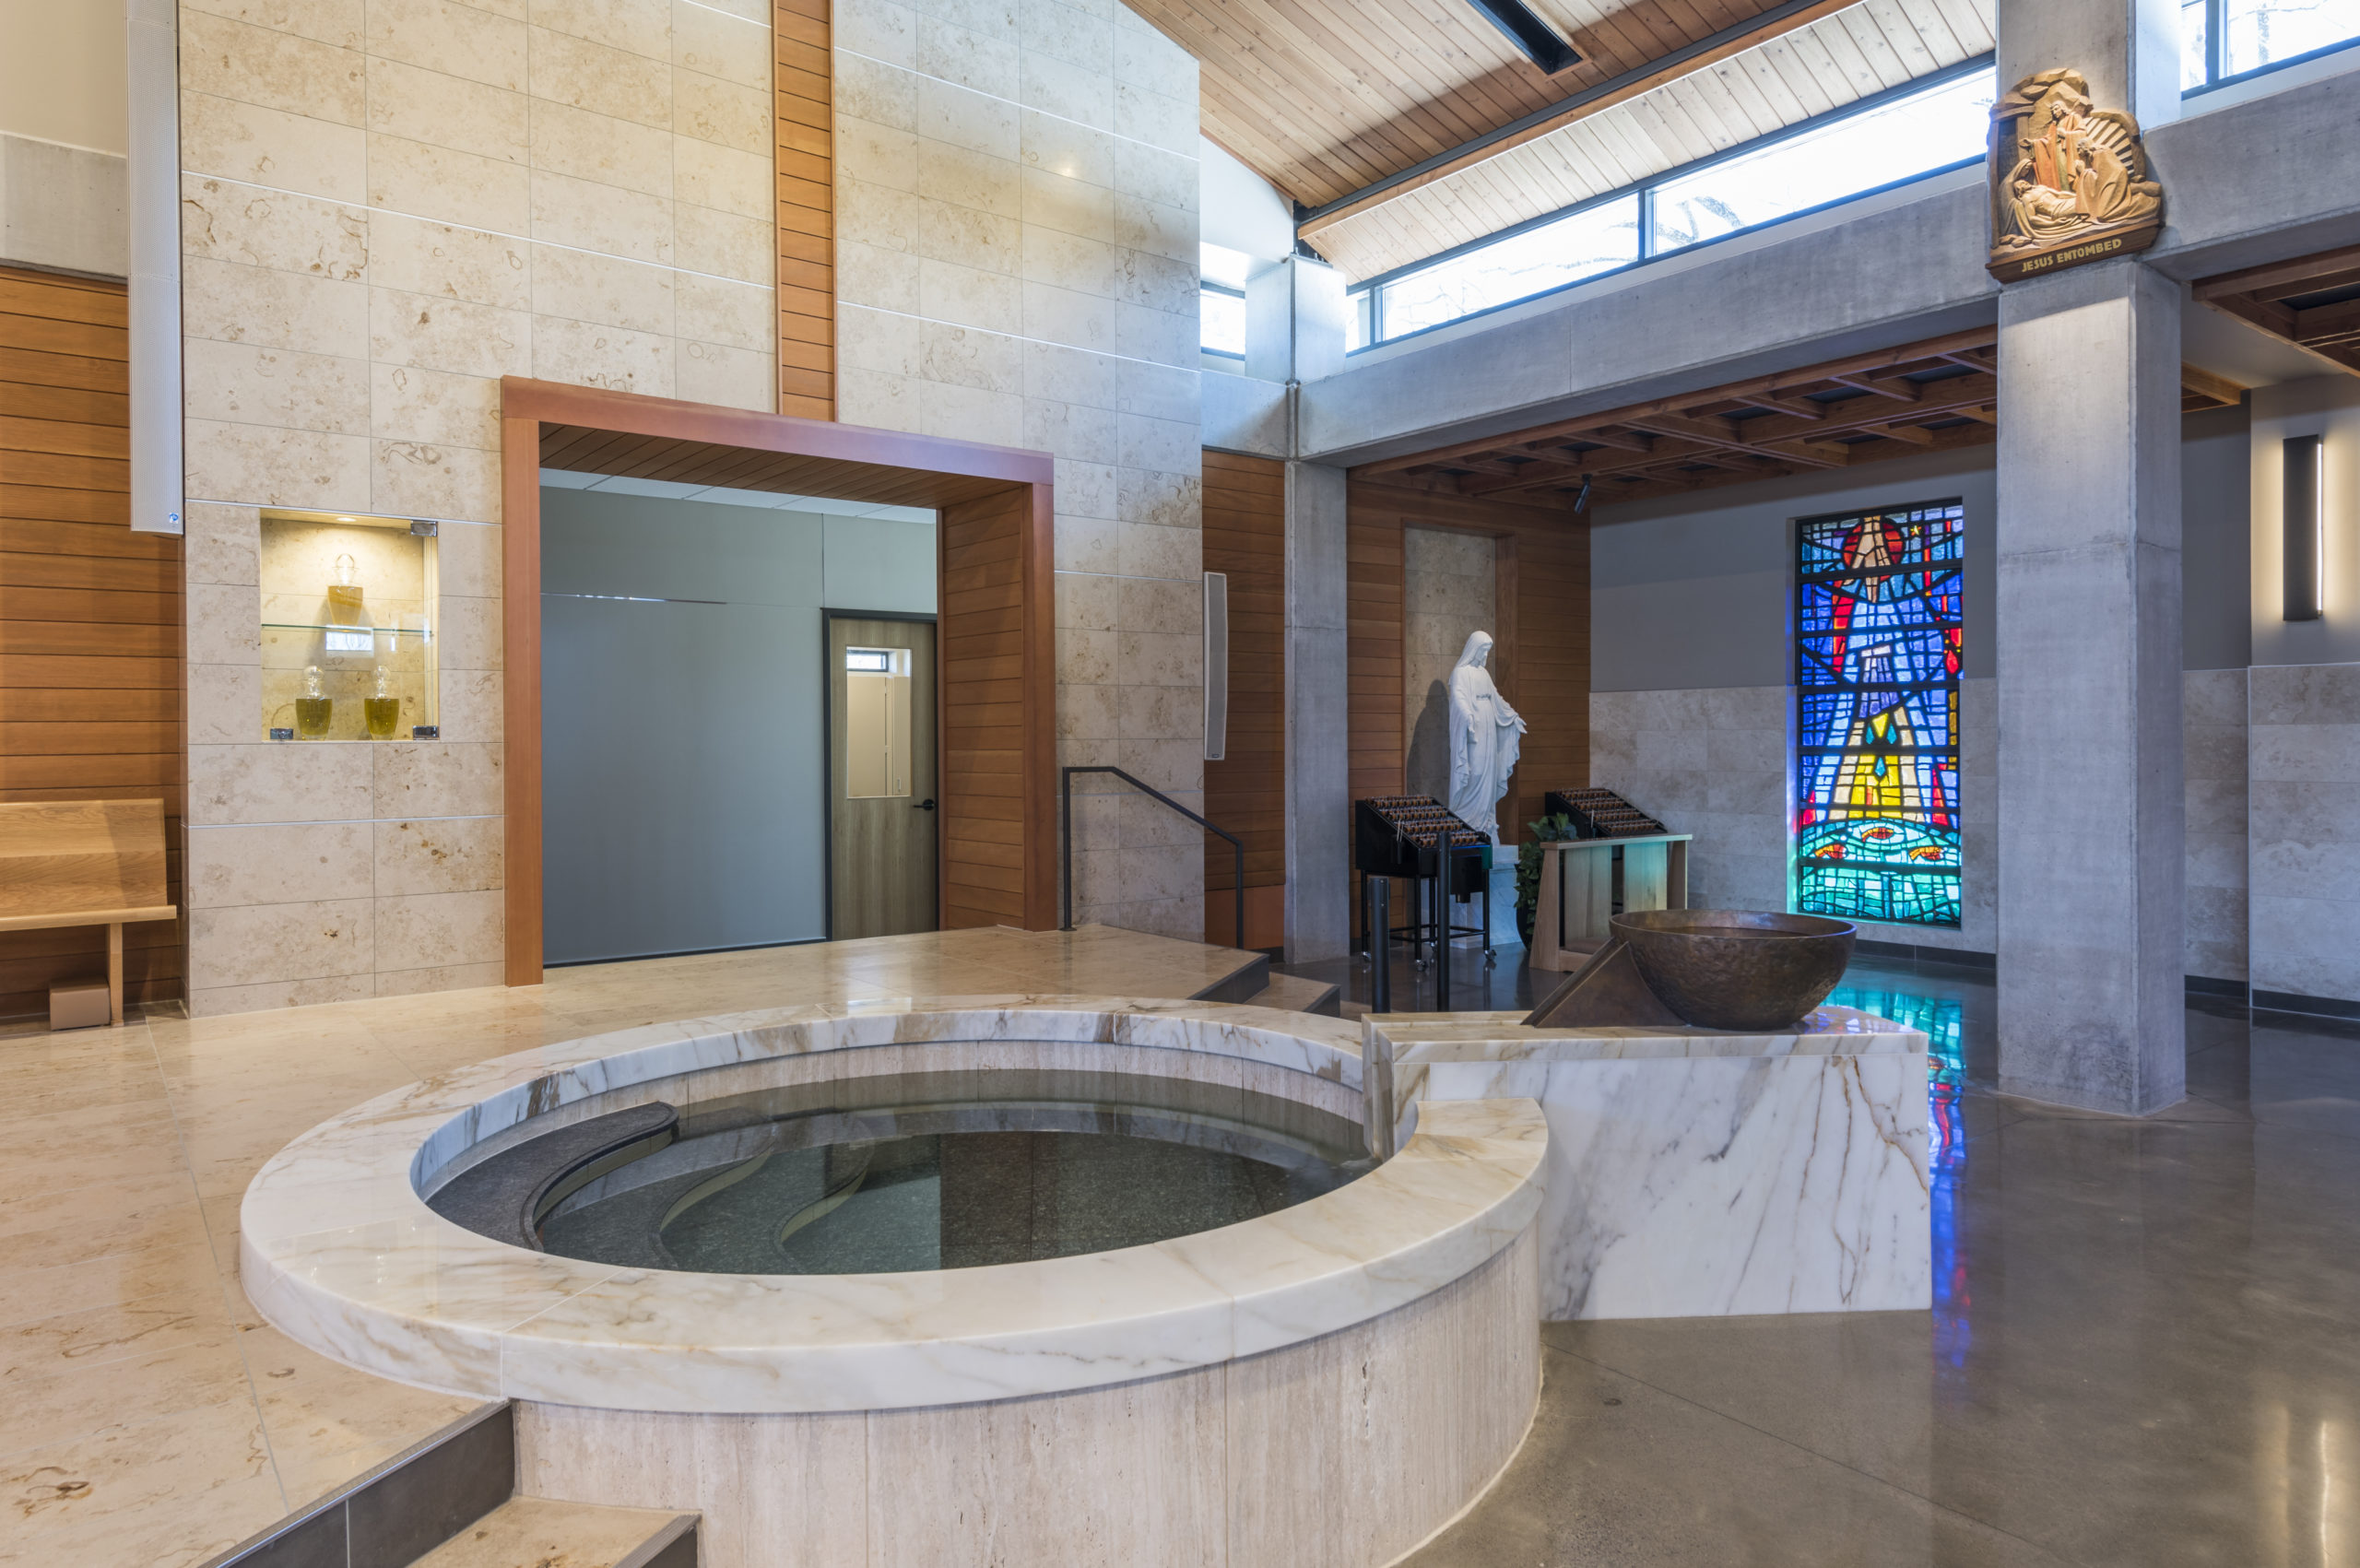 Circular Immersion Baptismal Font with Upper Bronze Bowl, Good Shepherd Church, Garland, TX.